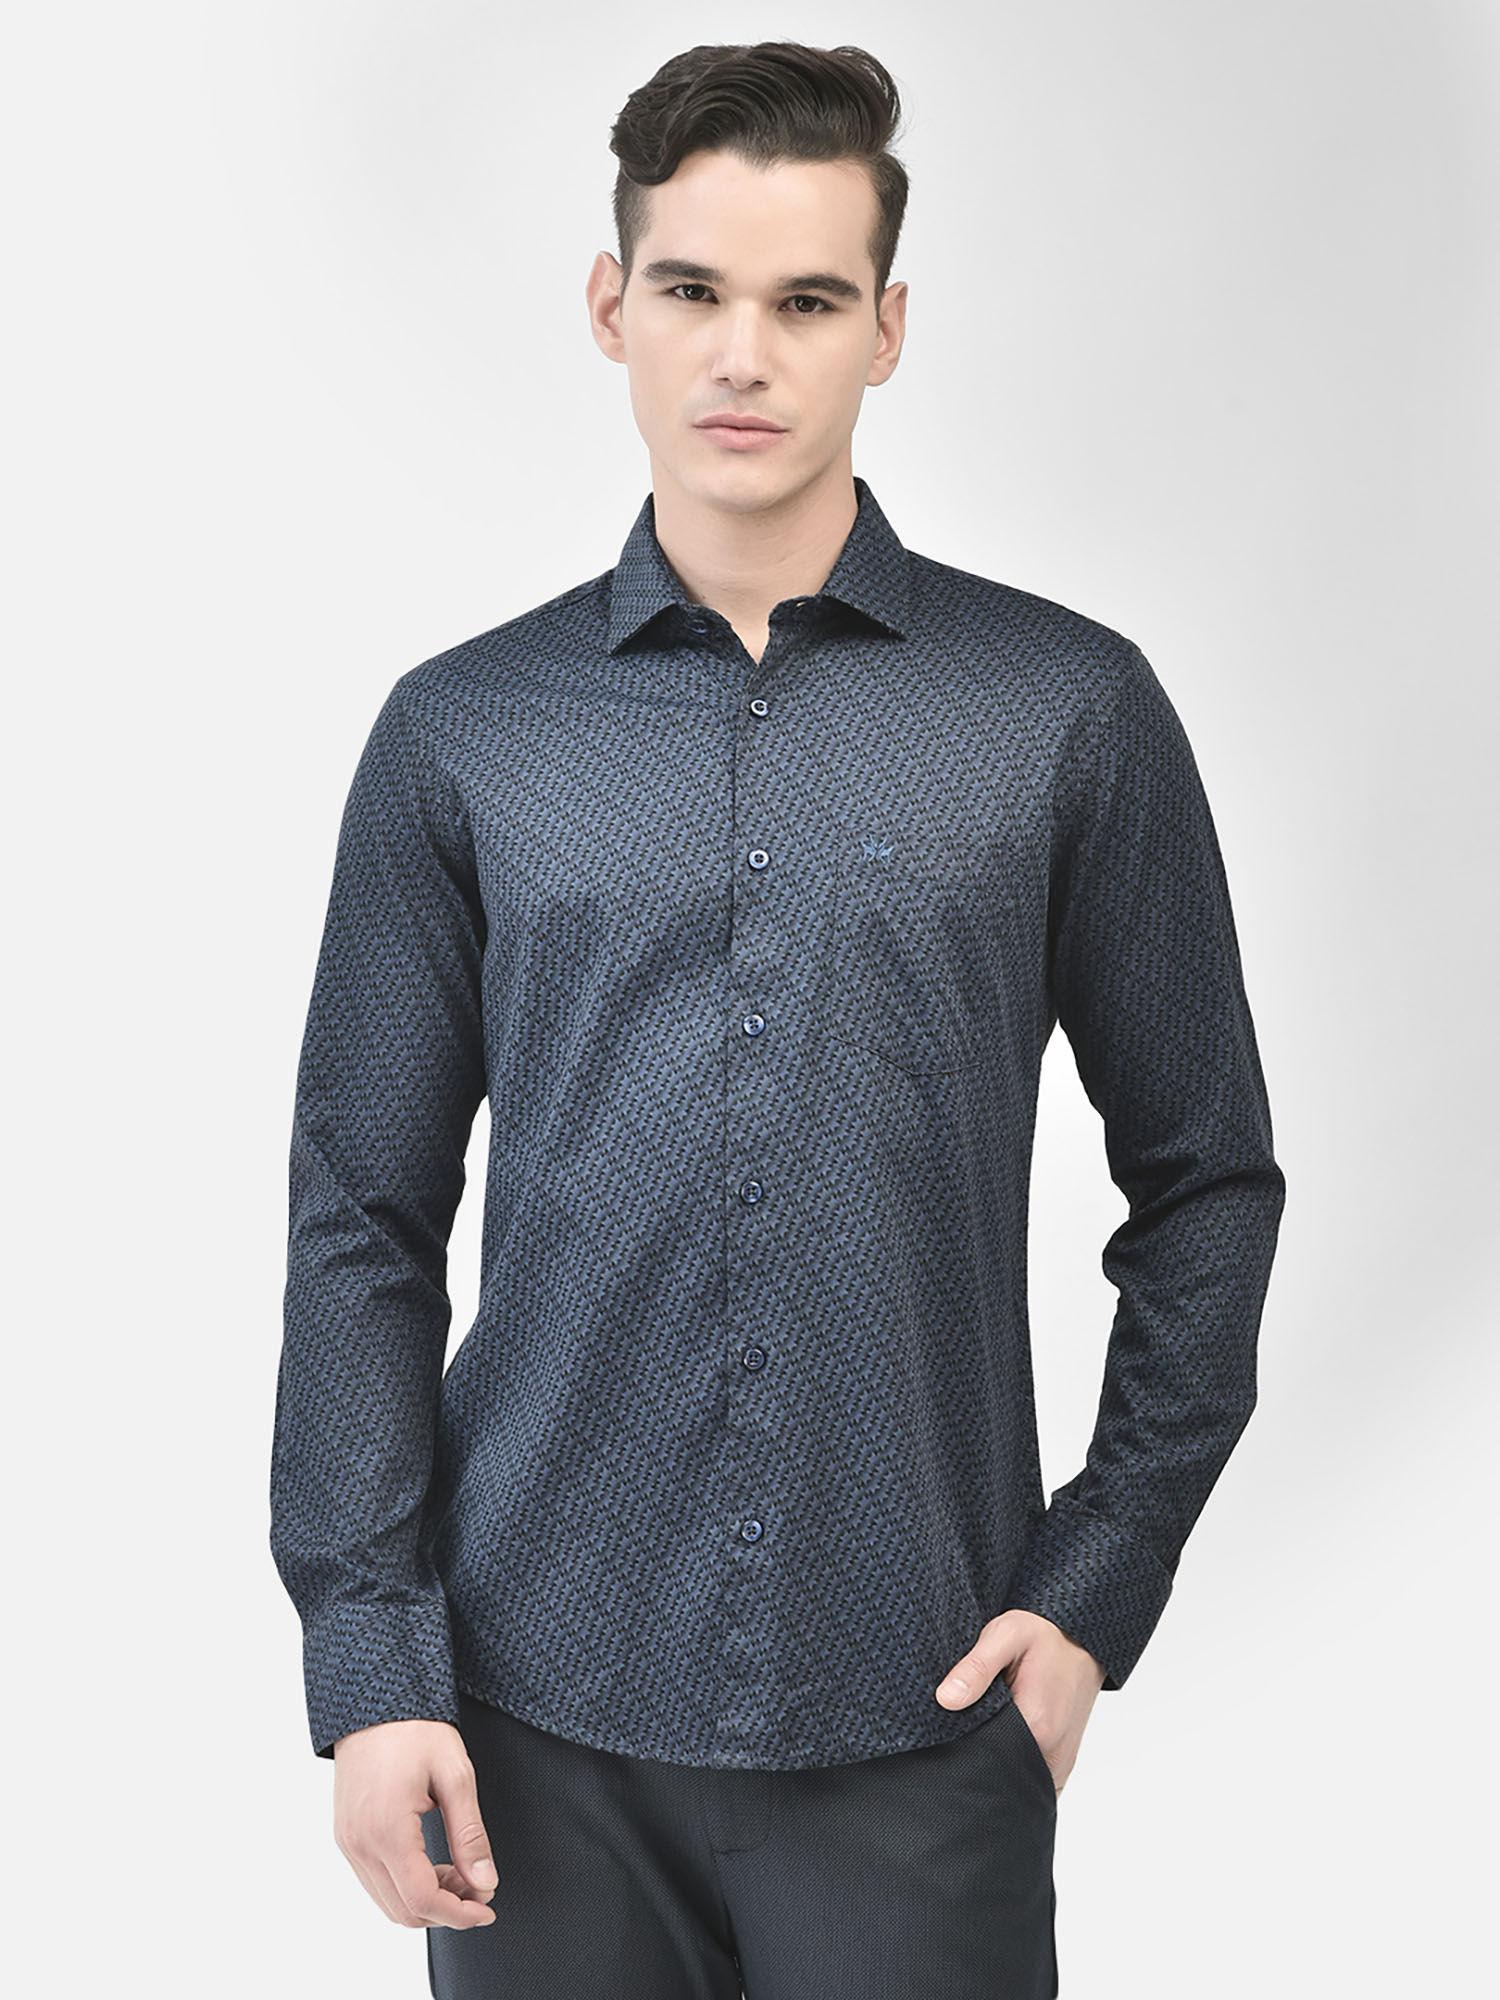 men's navy blue printed shirt